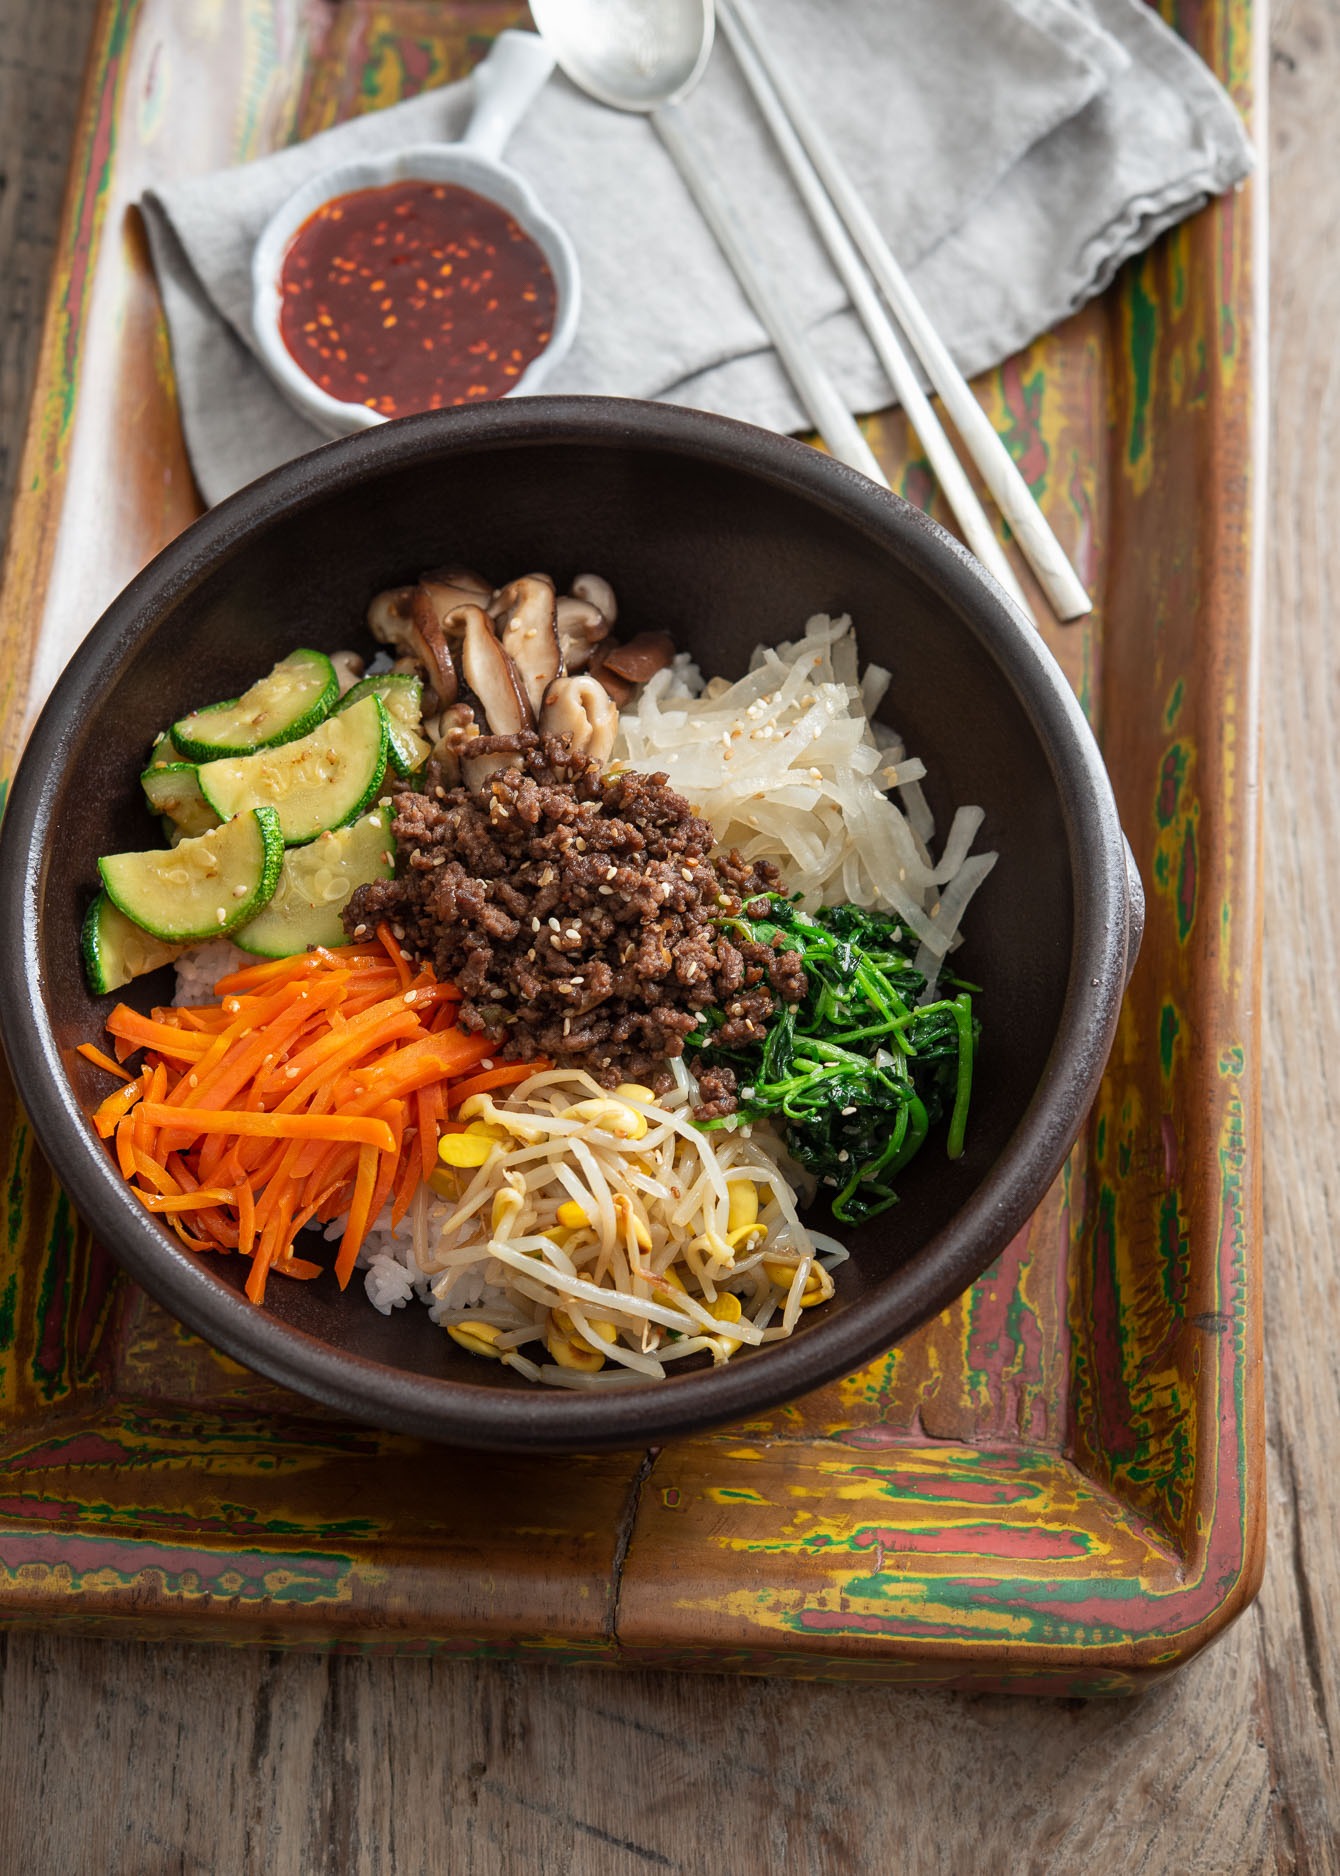 Bibimbap, Korean rice bowl, arranged with colorful vegetables and ground beef bulgogi over rice.